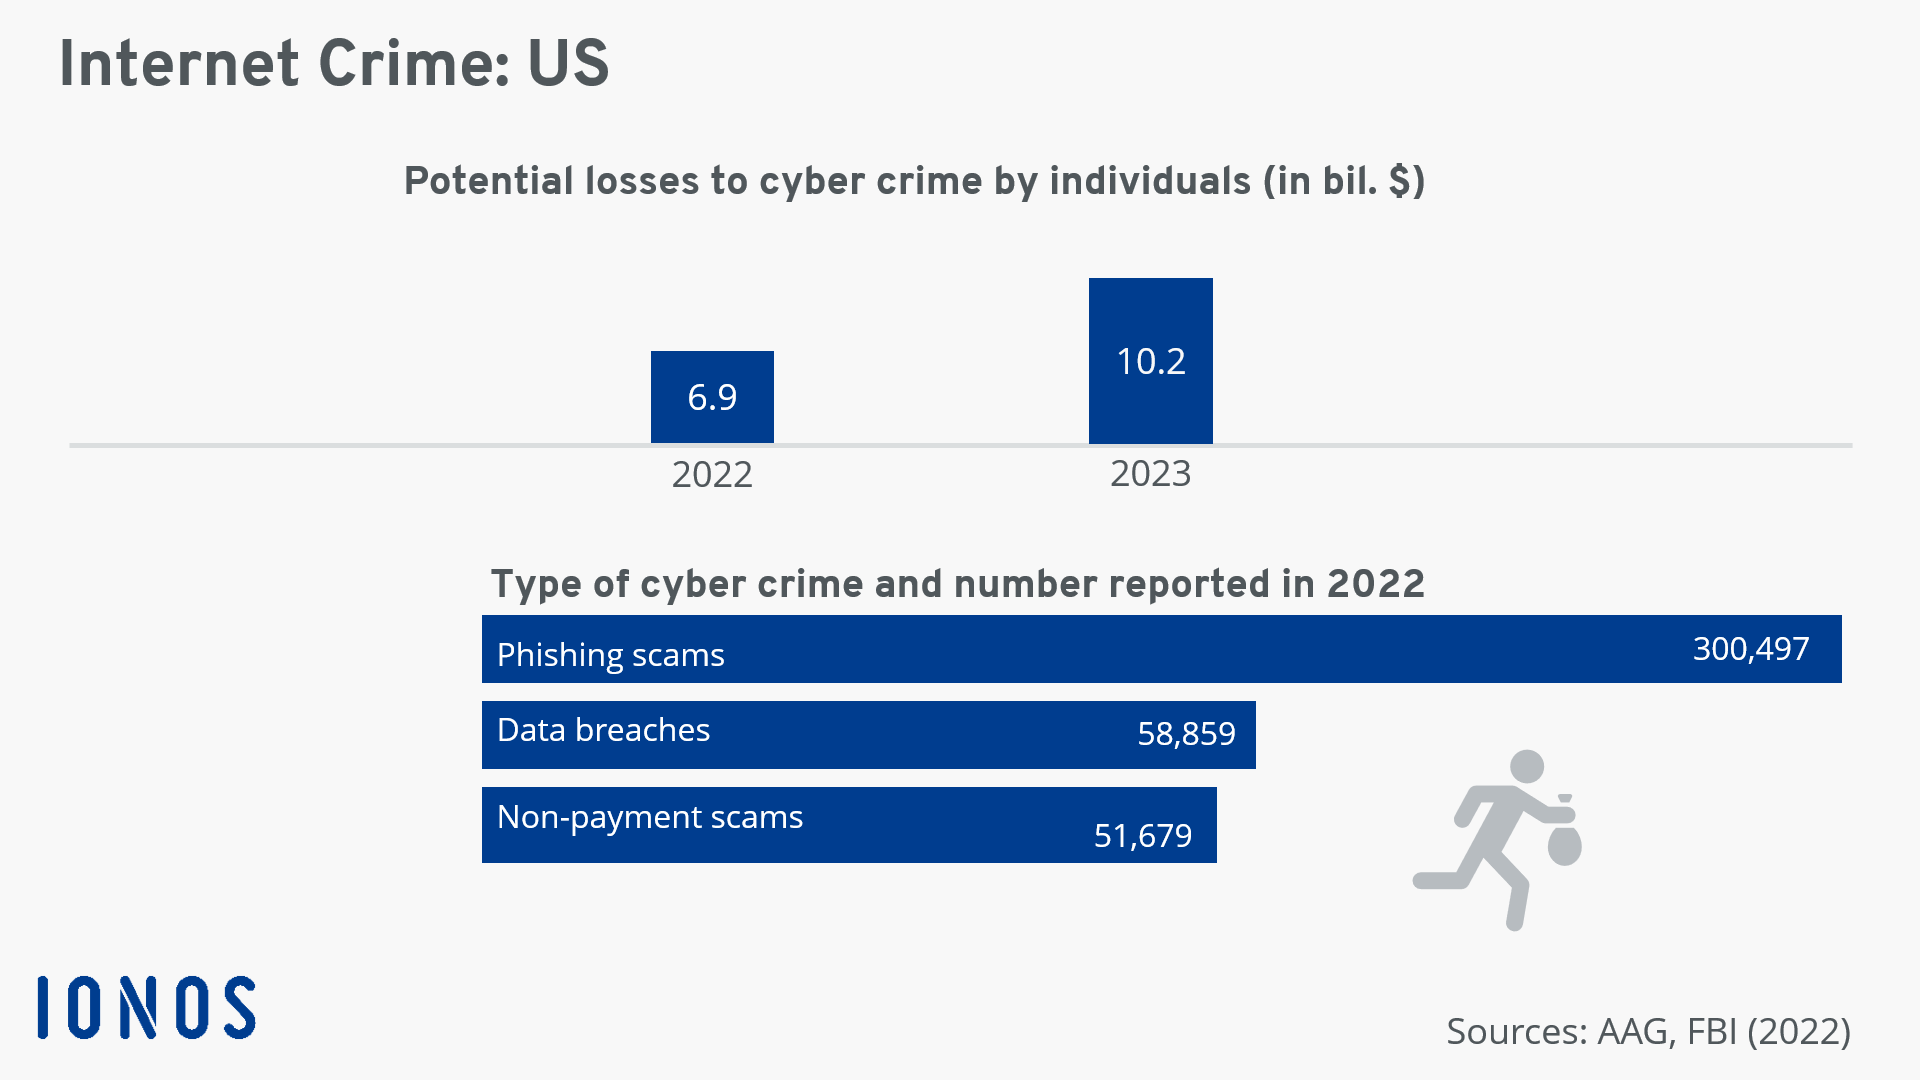 Internet crime in the US in 2022